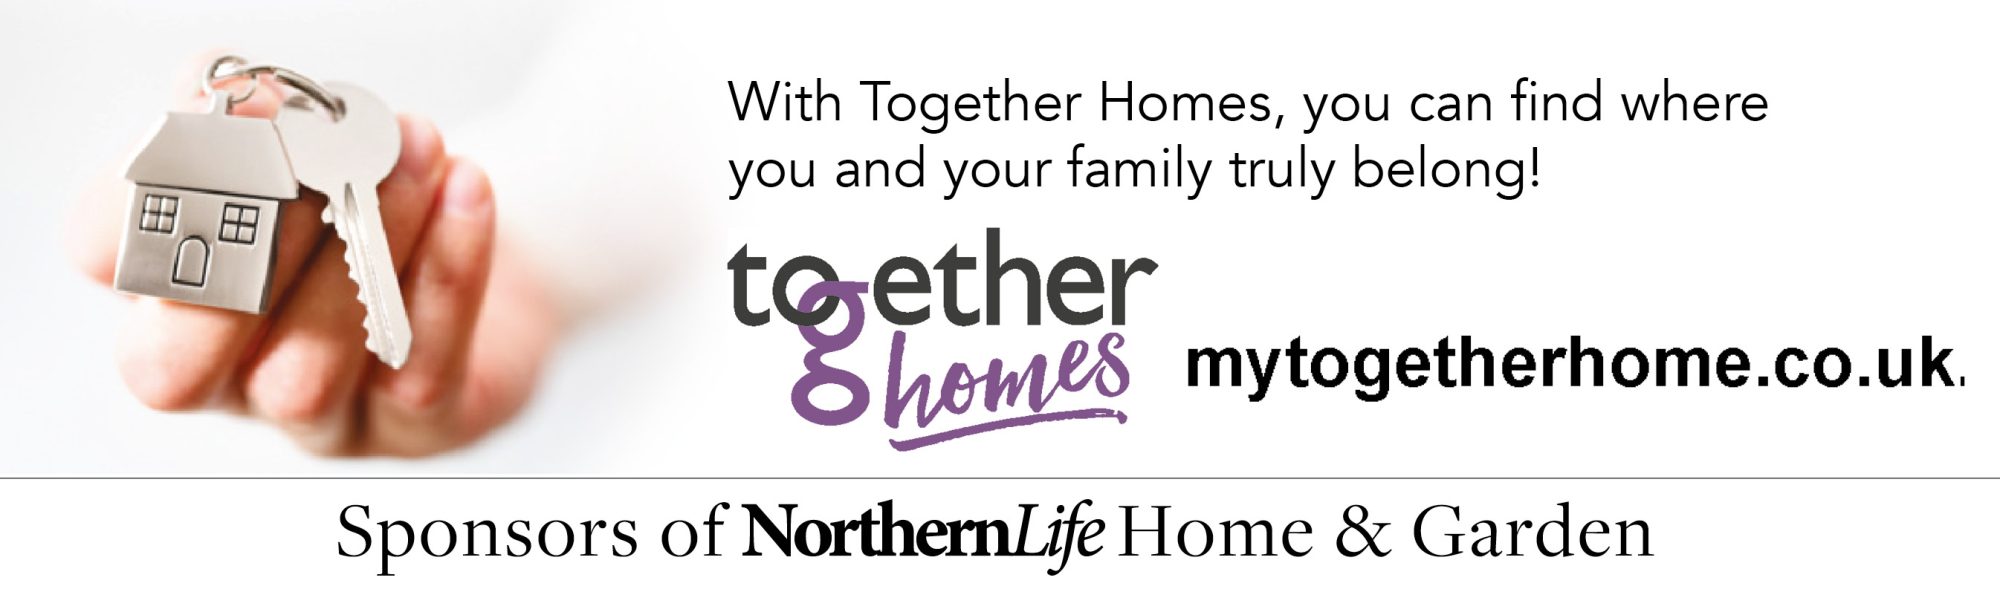 Together Housing Advert Web Banner 2